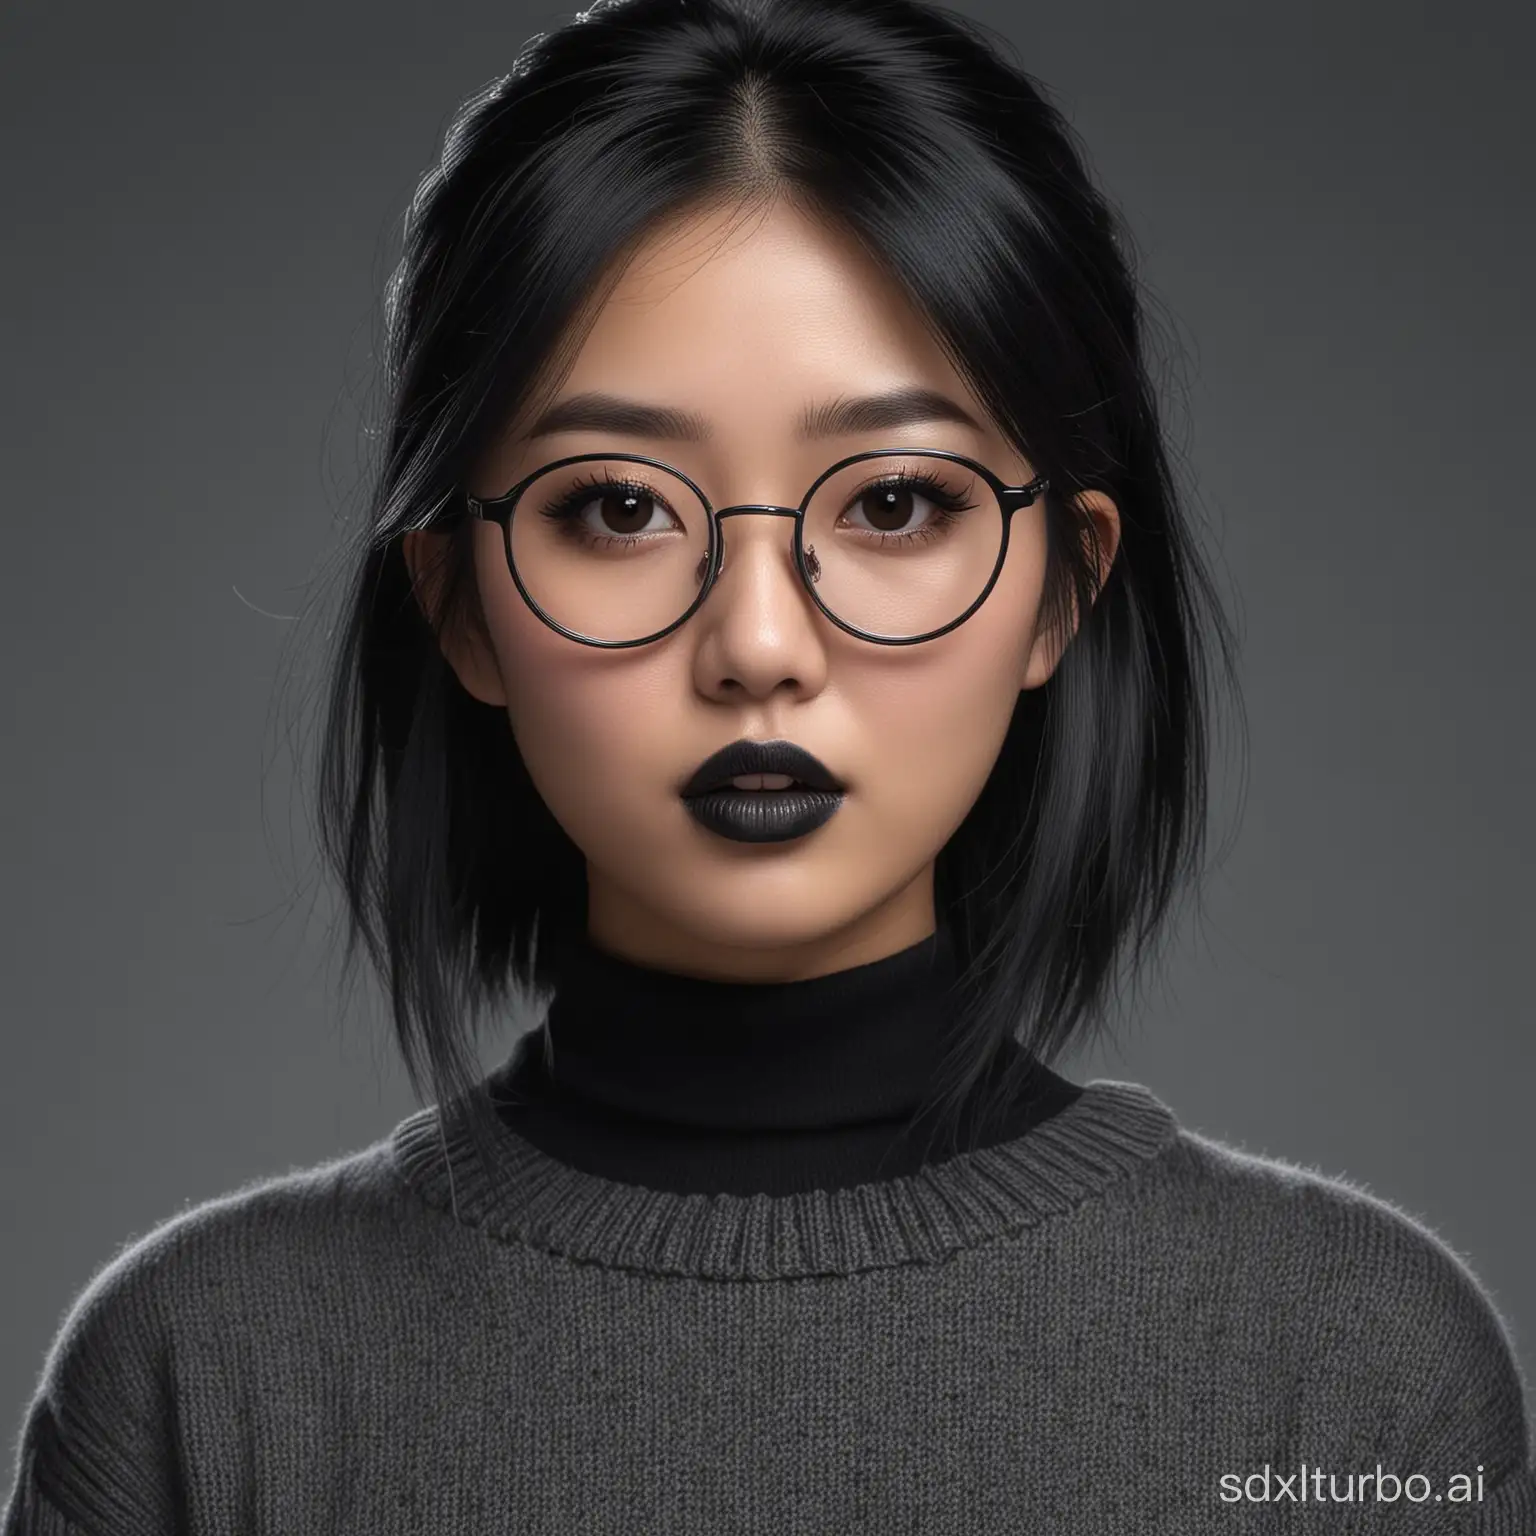 23-year-old Asian girl, black hair, wearing black lipstick, black sweater, black circular glasses, photorealistic, ultrarealistic, 4k